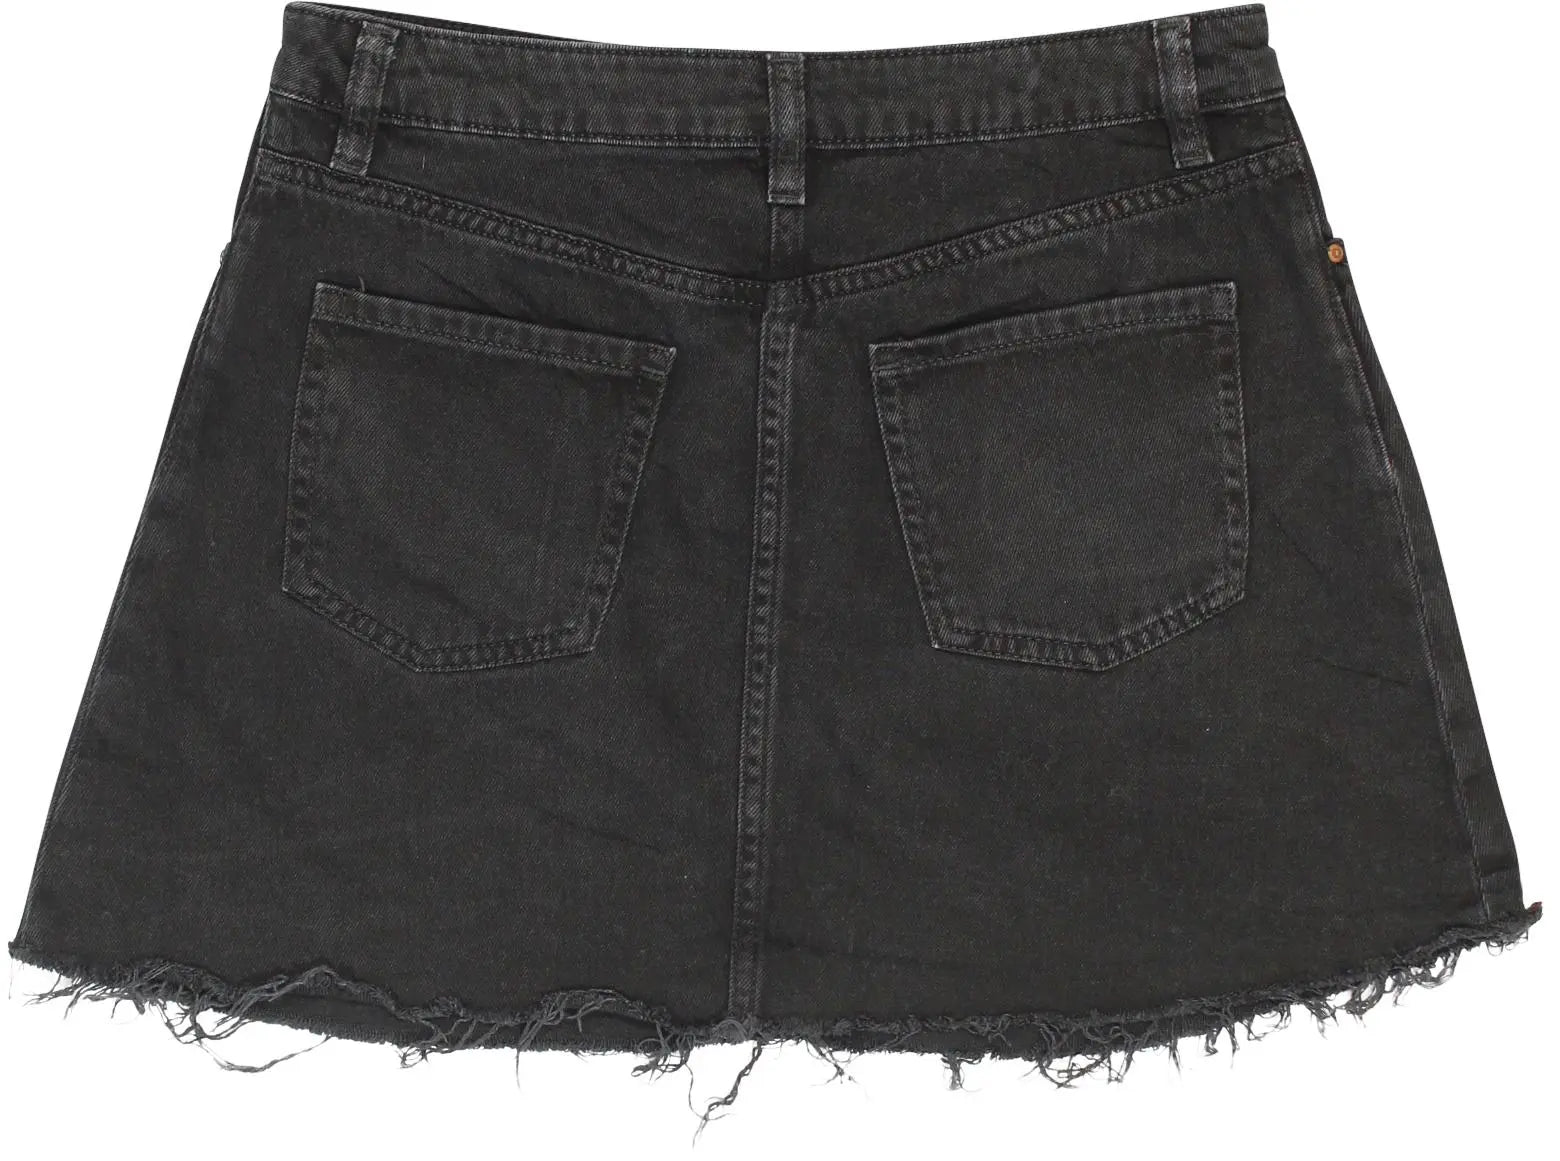 H&M - Black Denim Skirt- ThriftTale.com - Vintage and second handclothing